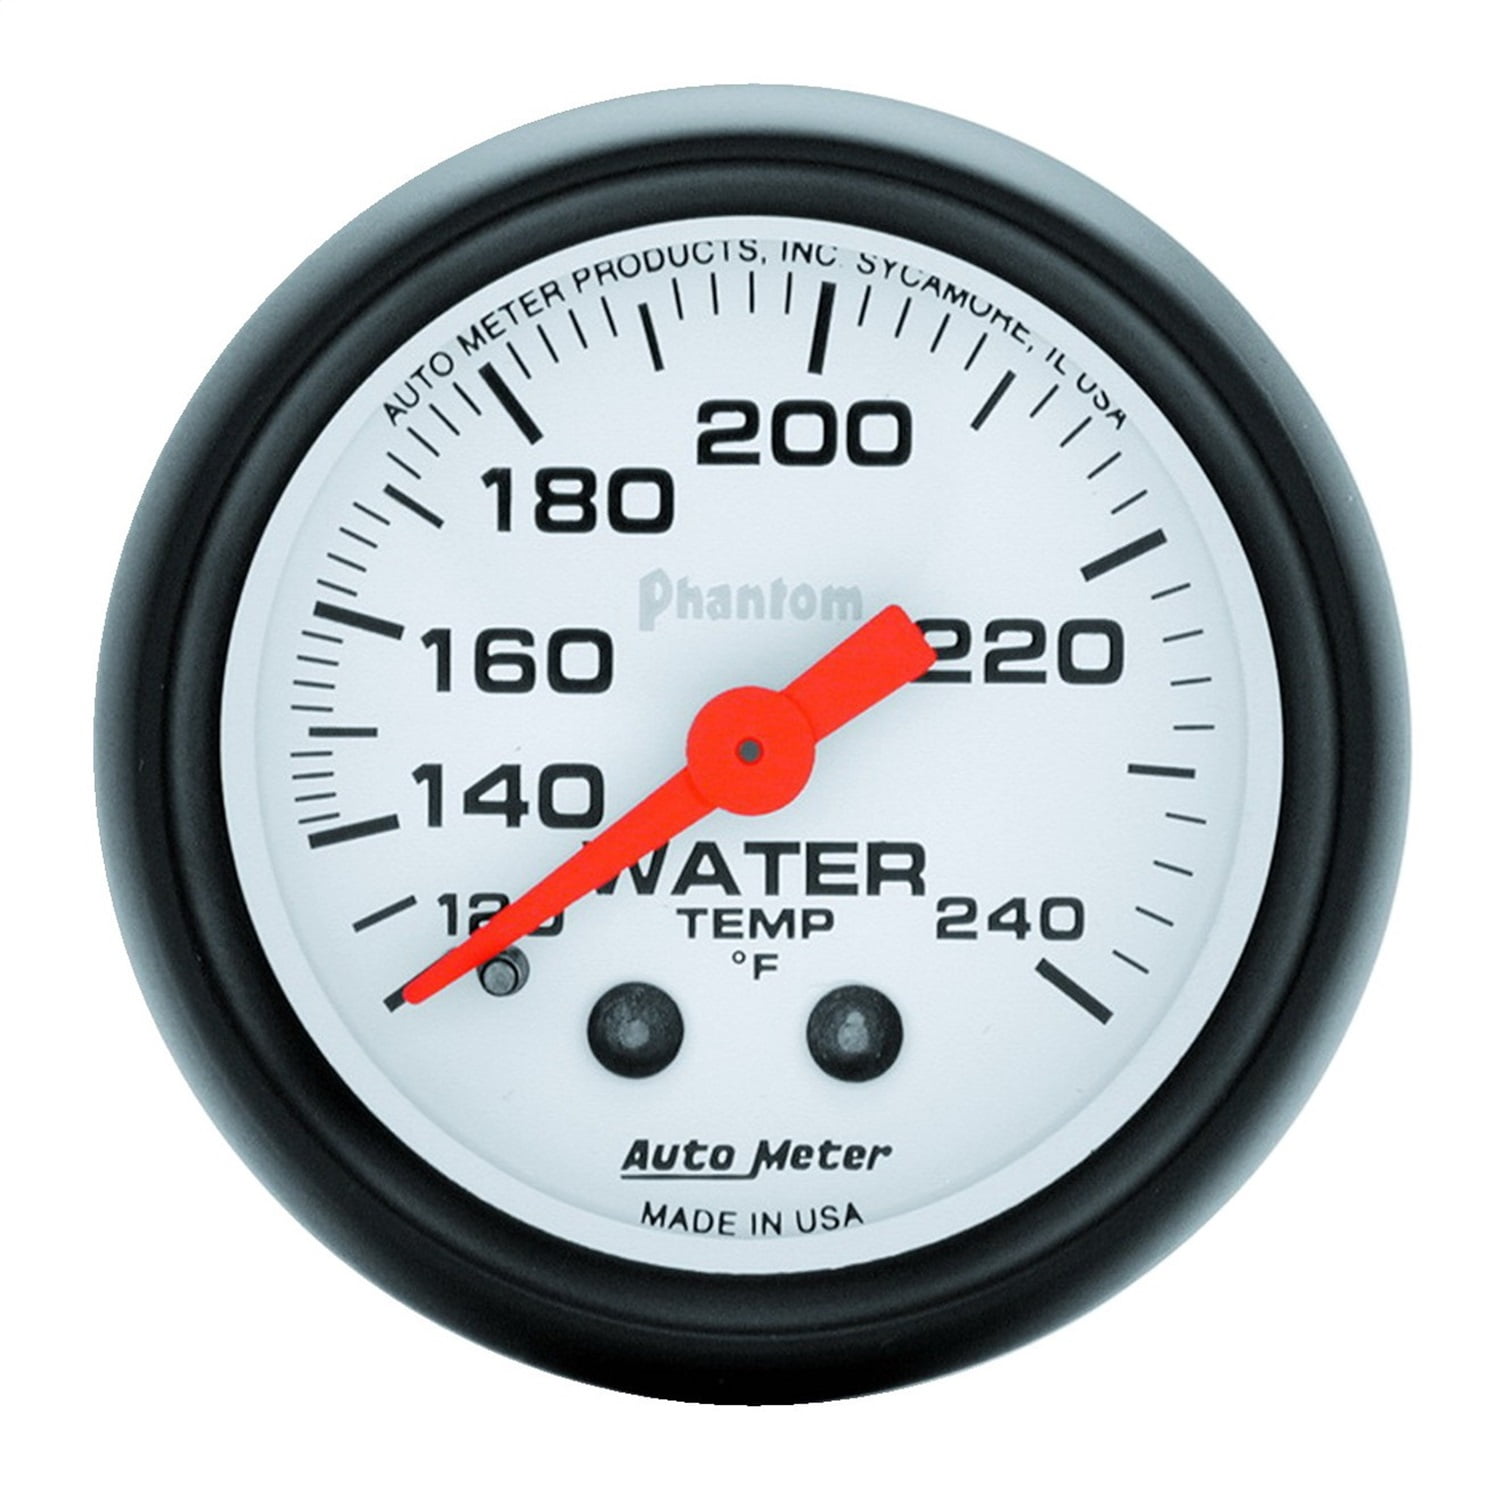 Auto Meter 5732 Phantom Mechanical Water Temperature Gauge